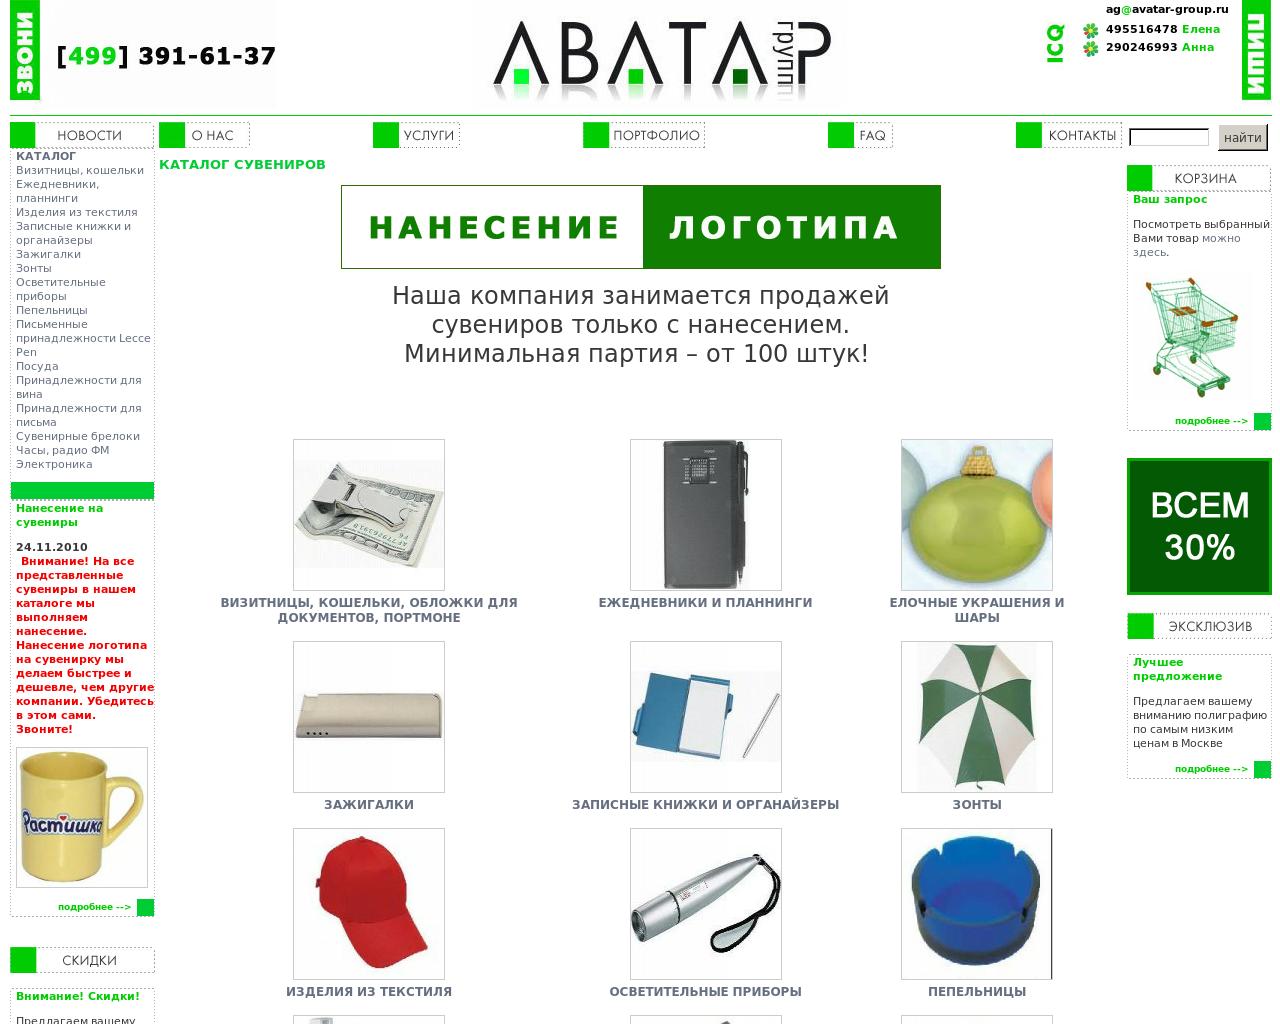 Изображение сайта avatar-gifts.ru в разрешении 1280x1024